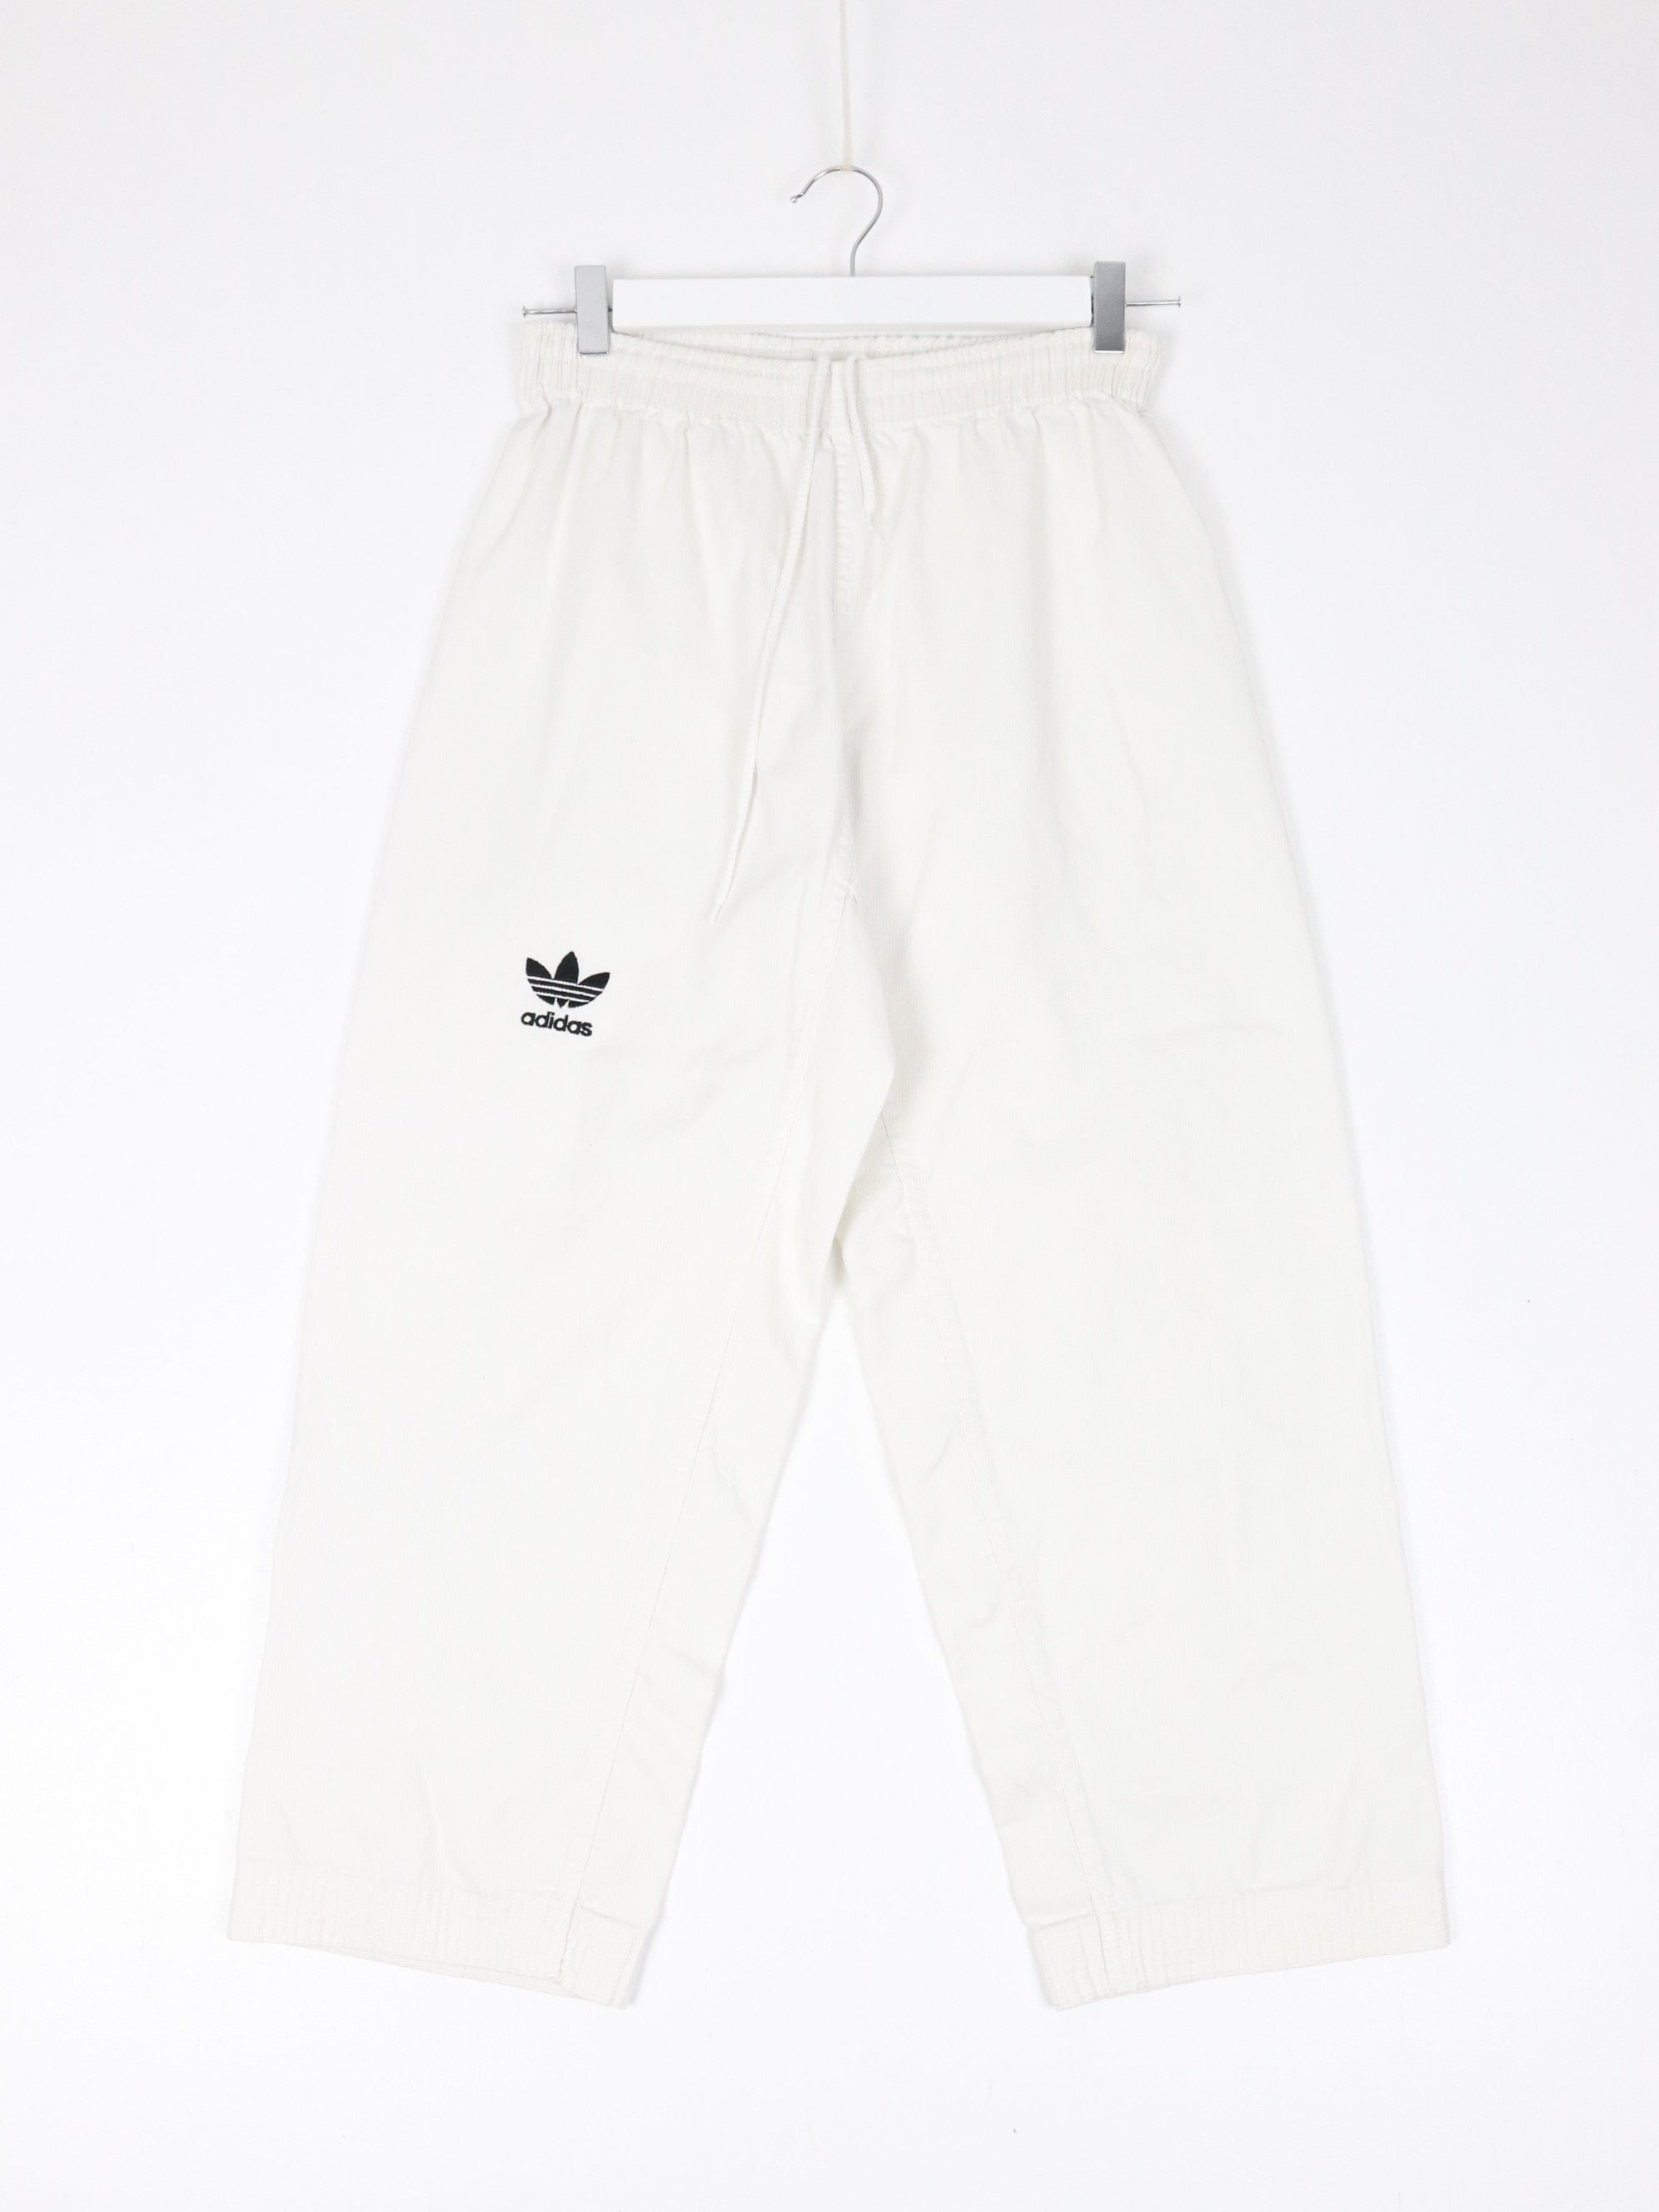 Vintage Adidas Pants Adult 26 x 26 White Athletic 90s